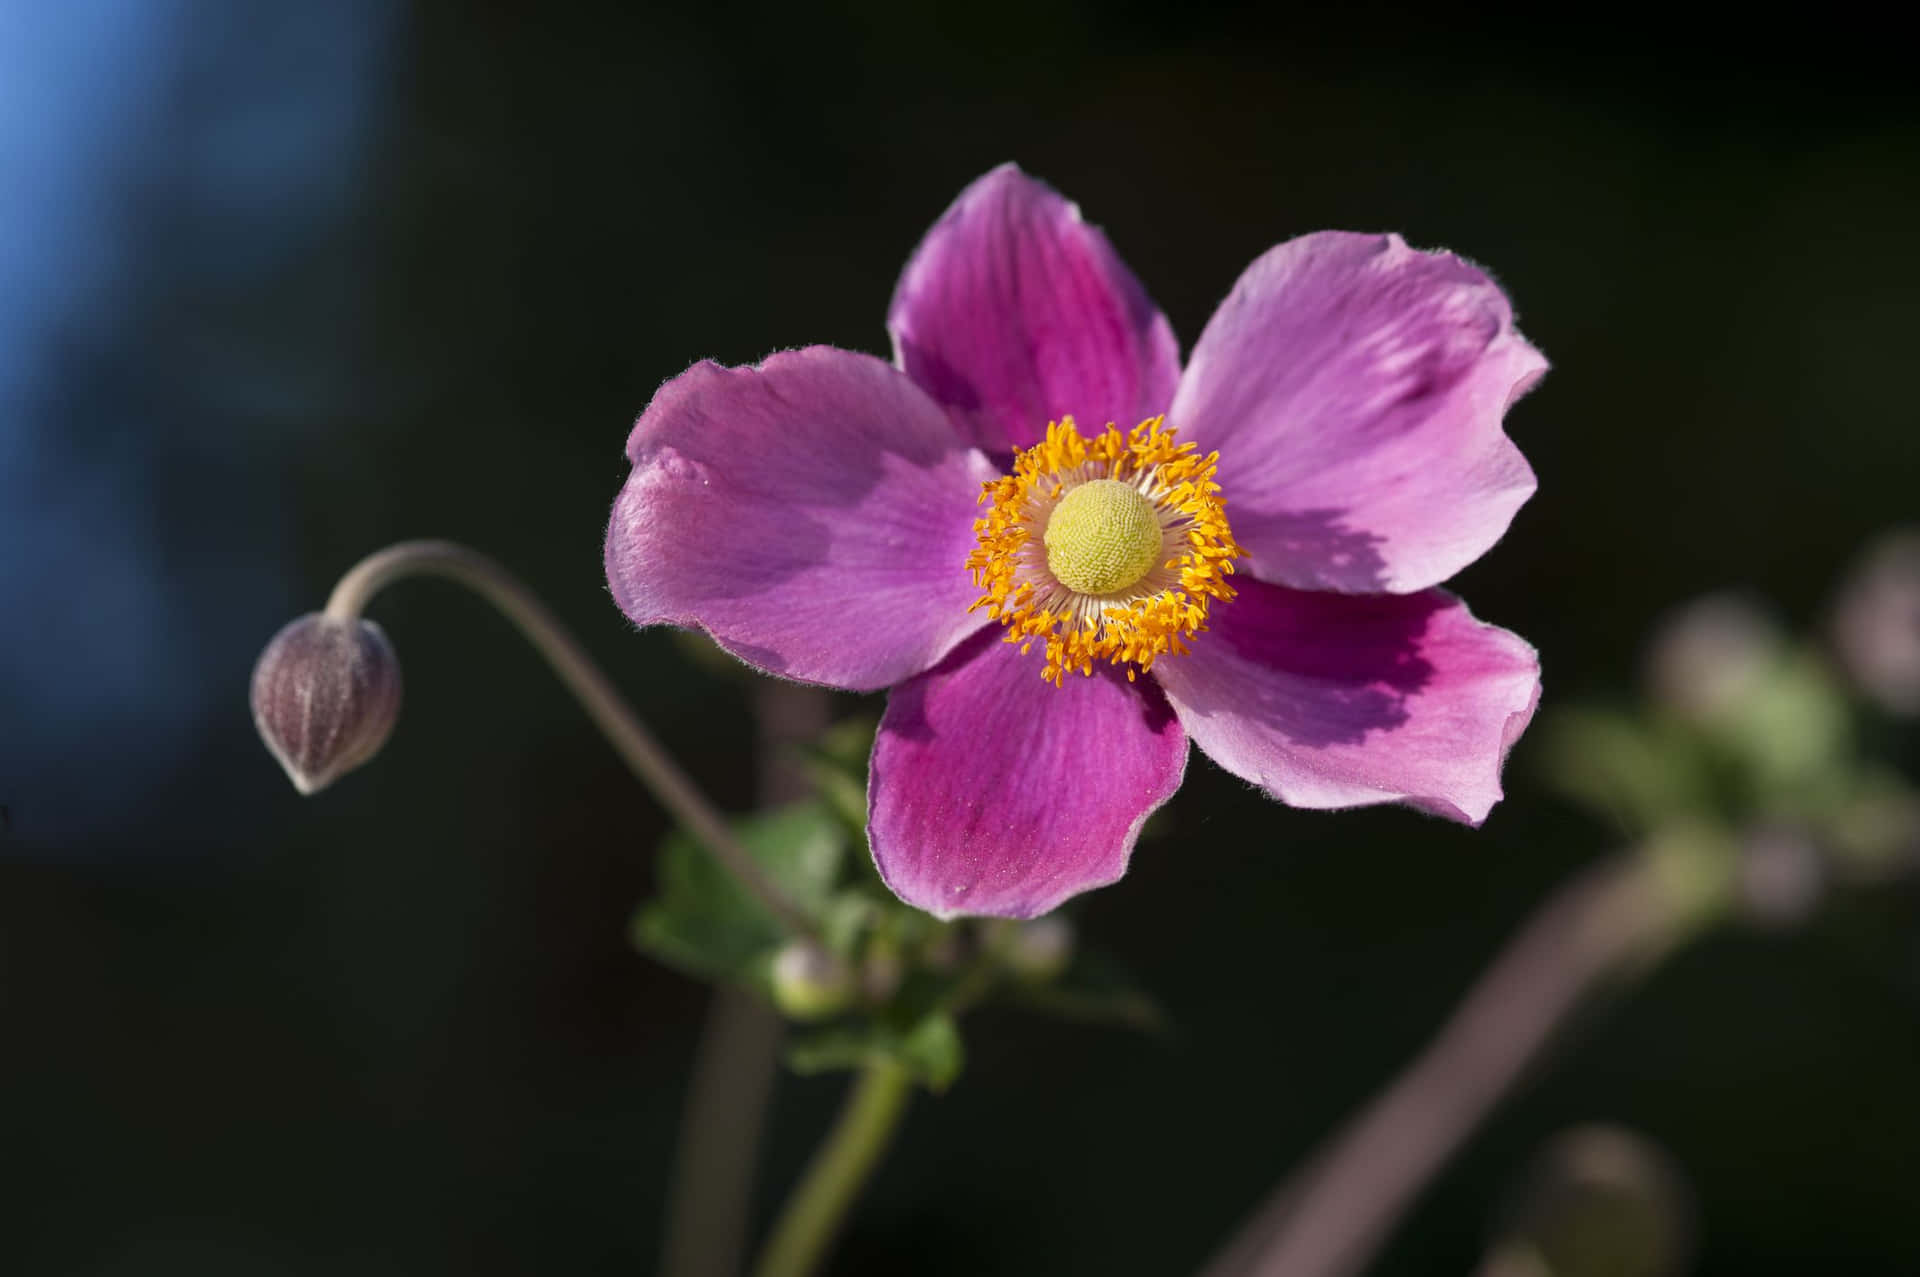 A stunning close-up on an Anemone flower.